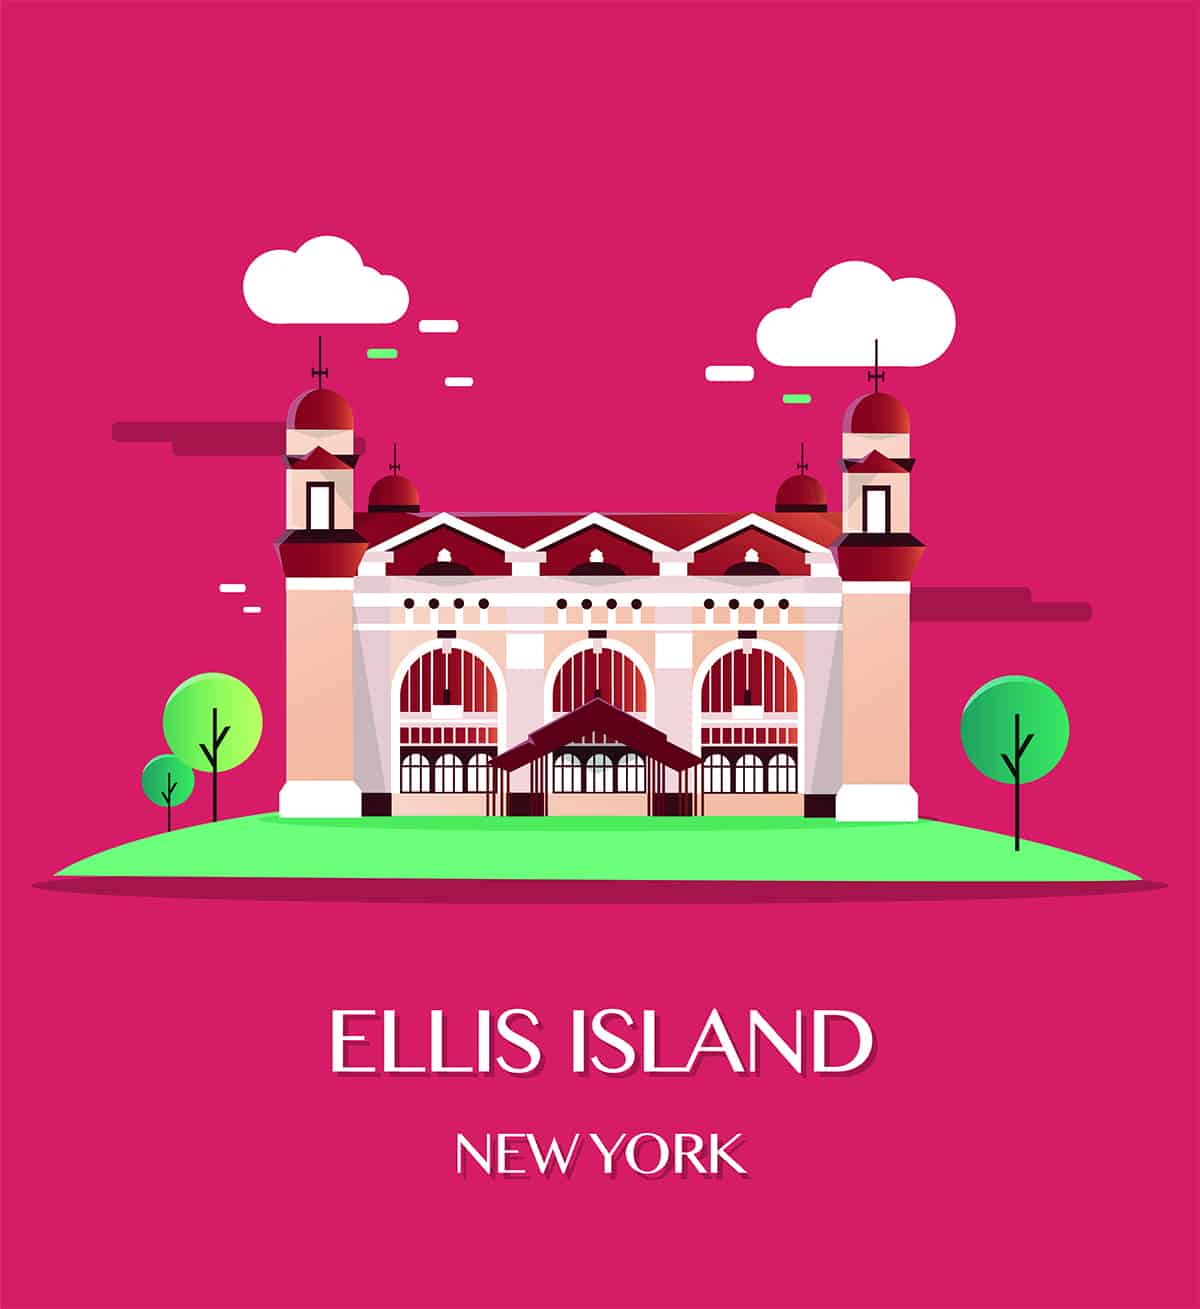 One-Third of Ellis Island